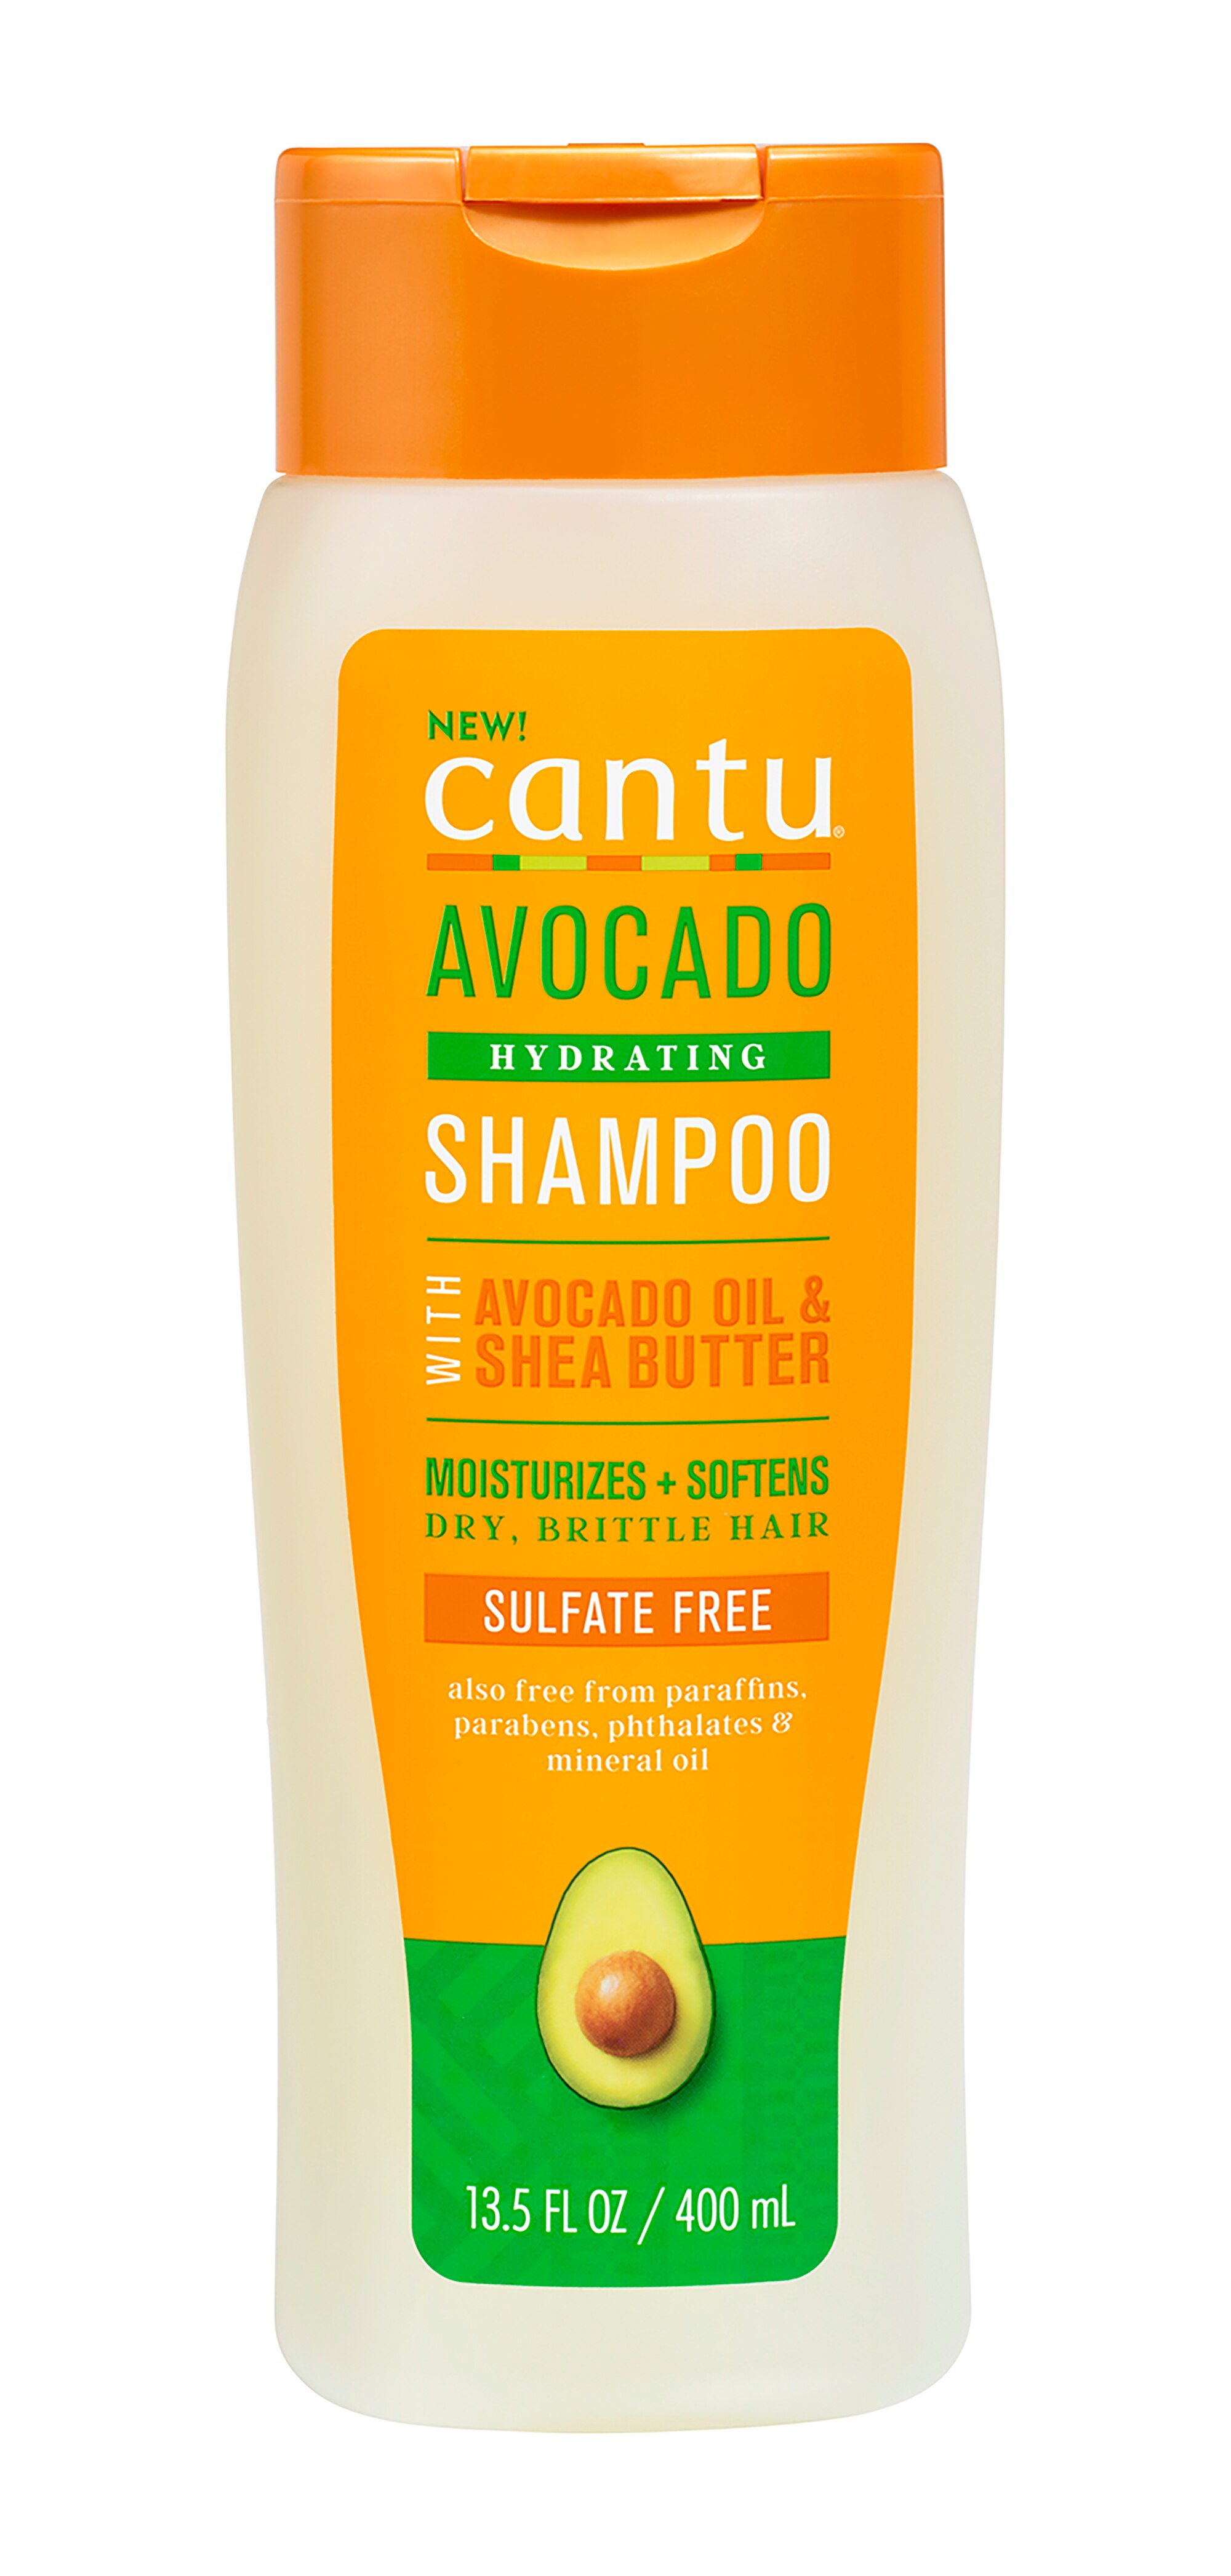 Cantu Avocado Sulfate Free Shampoo, 13.5 OZ